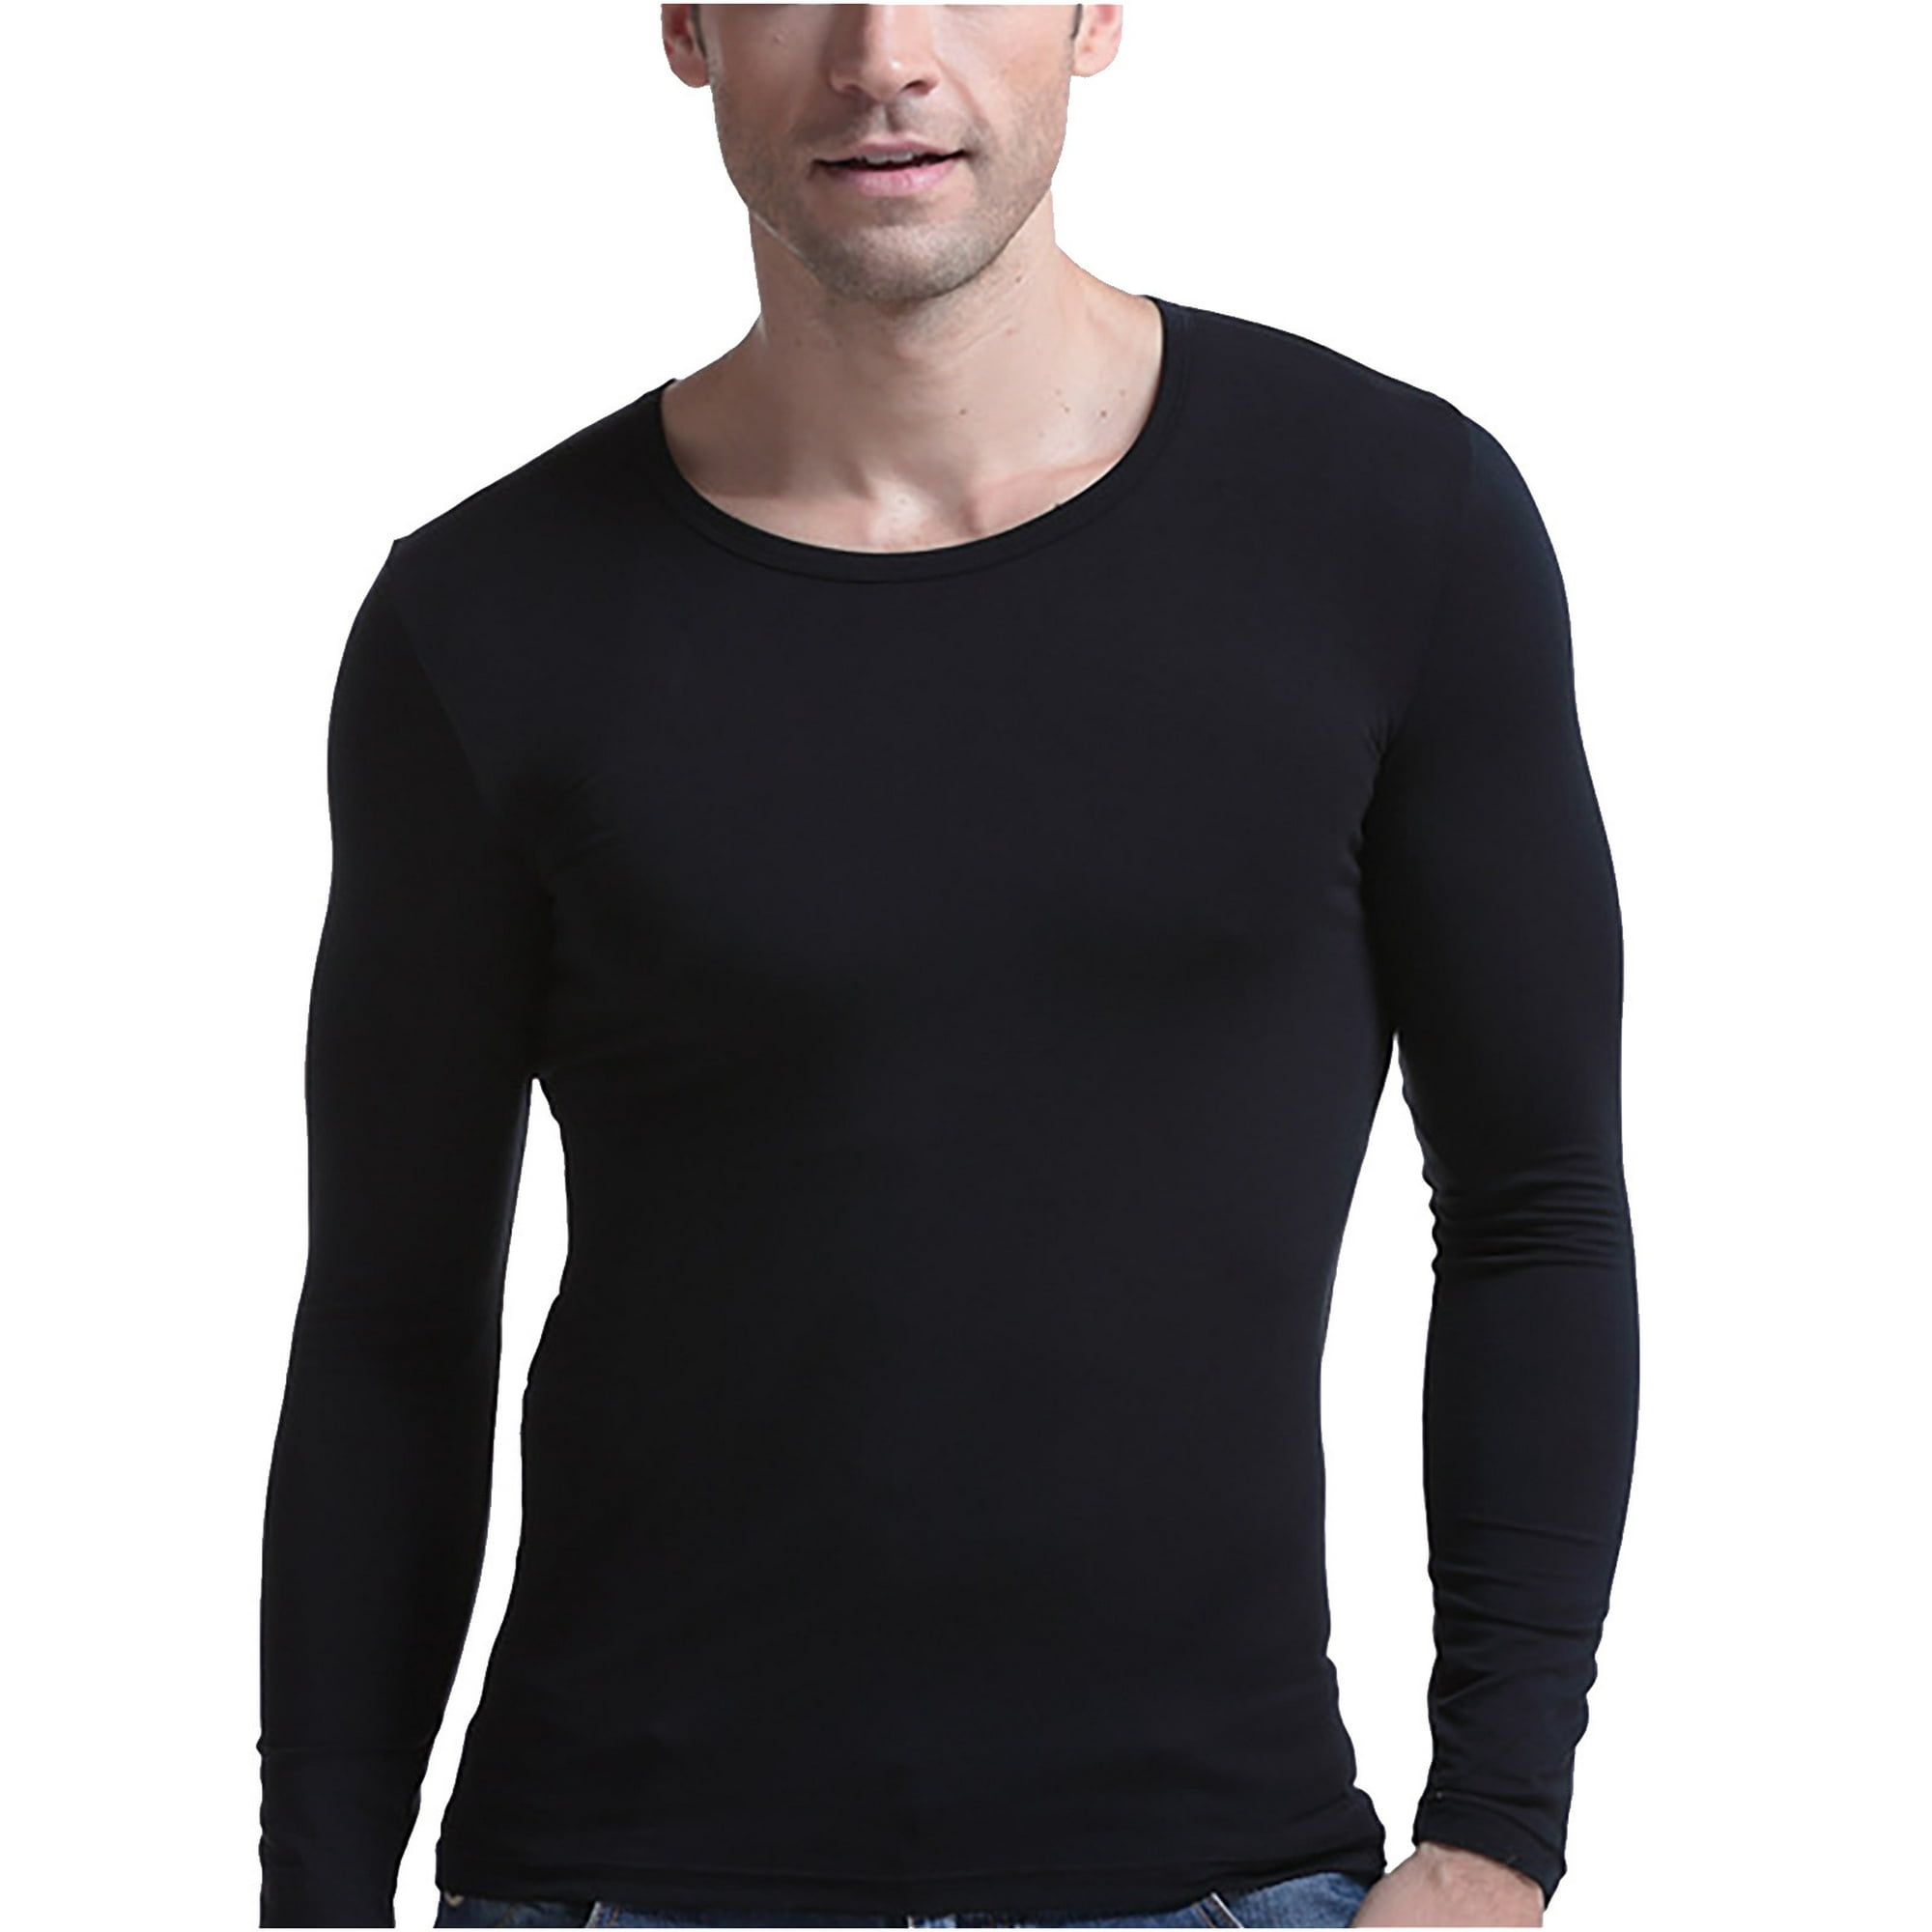 Ropa interior térmica fina delgada para hombre, ropa de otoño con cuello en  V, camisa básica transpi Pompotops oipoqjl8455